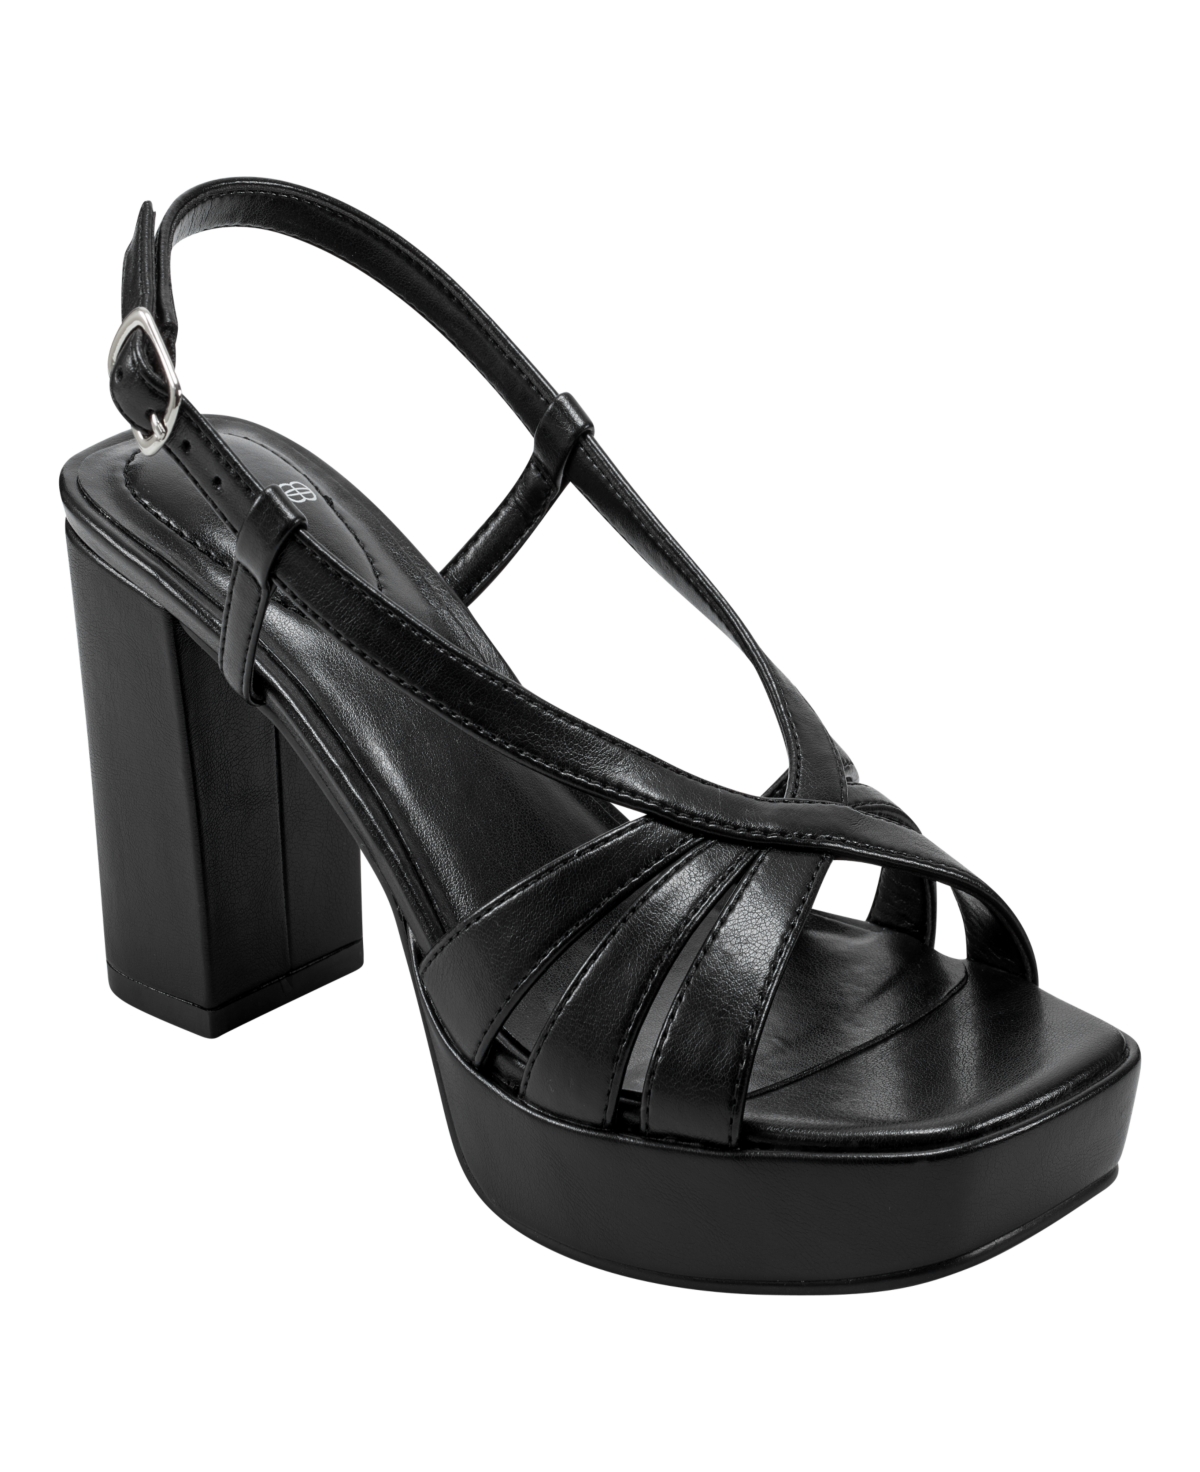 Women's Brie Platform Strappy Slingback Dress Sandals - Cream